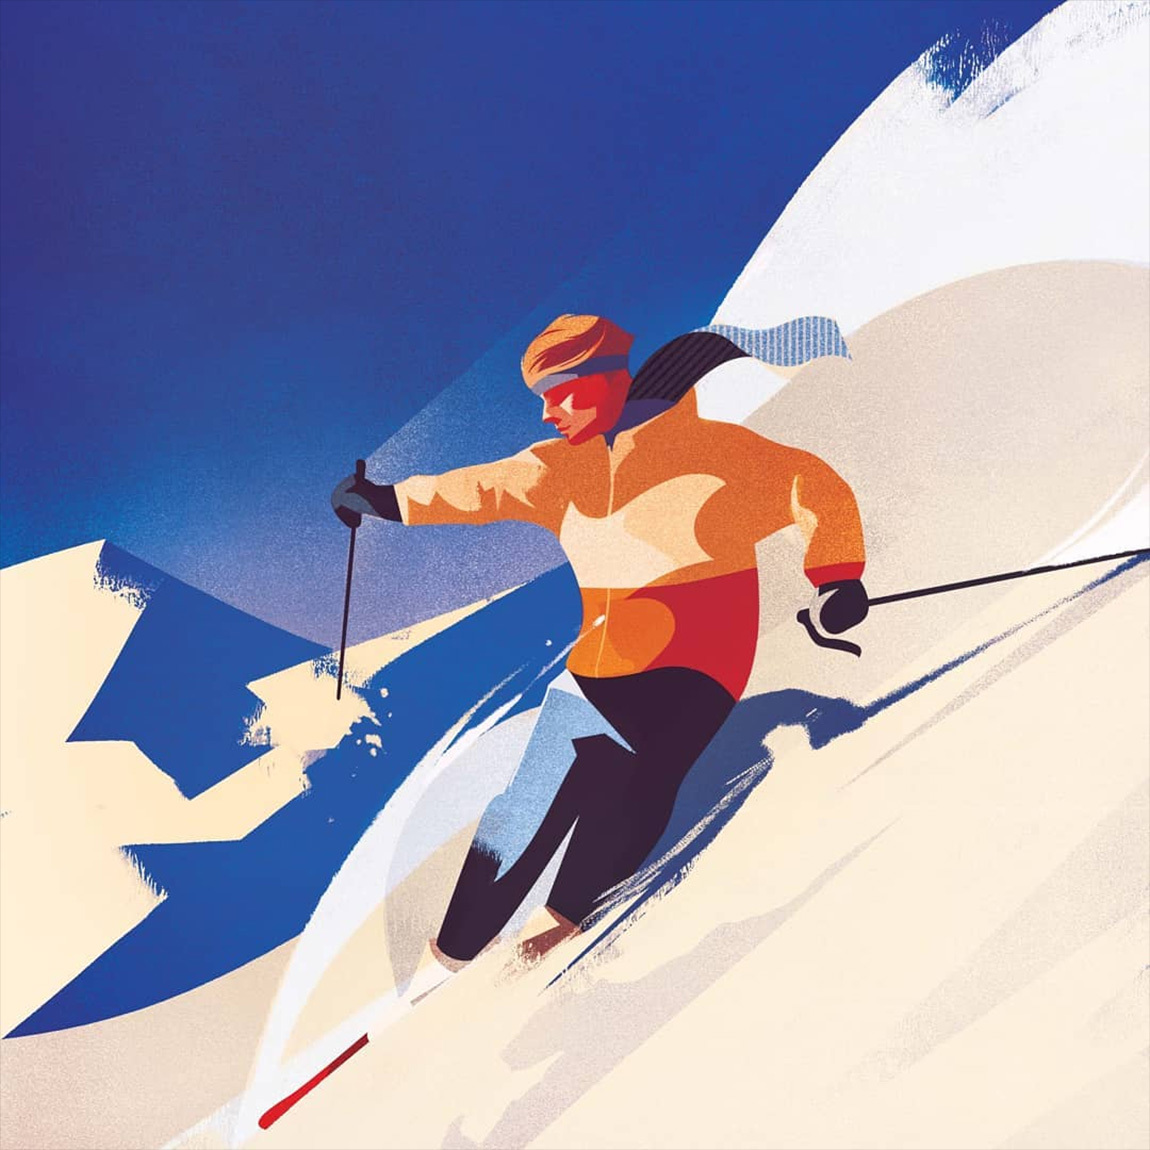 Ski illustration